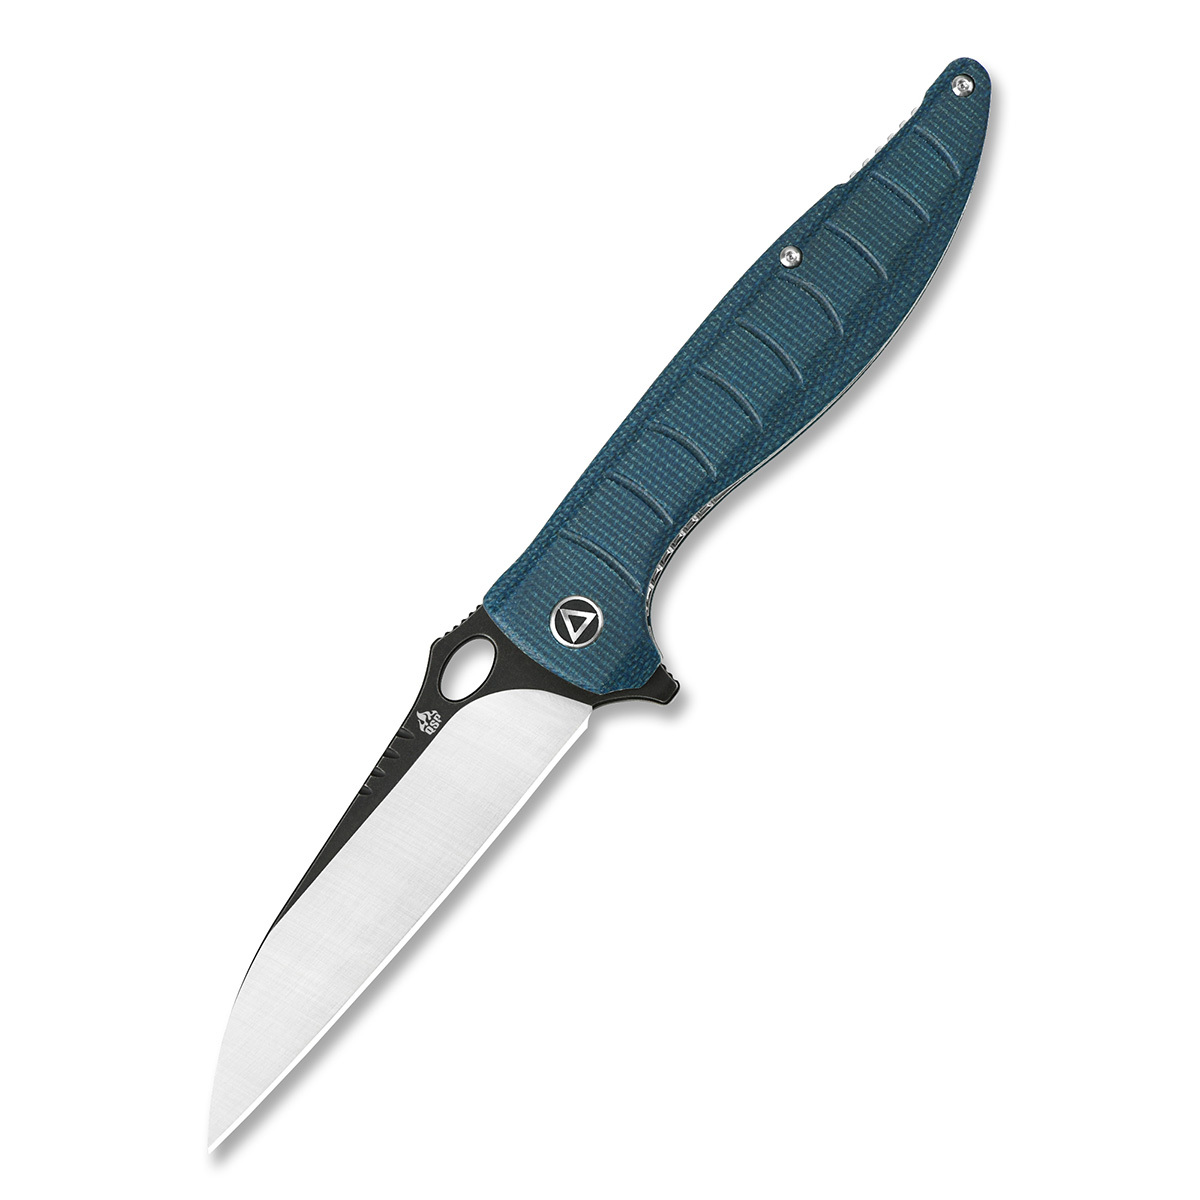 Складной нож Locust, сталь 154CM, рукоять микарта, синий - фото 1